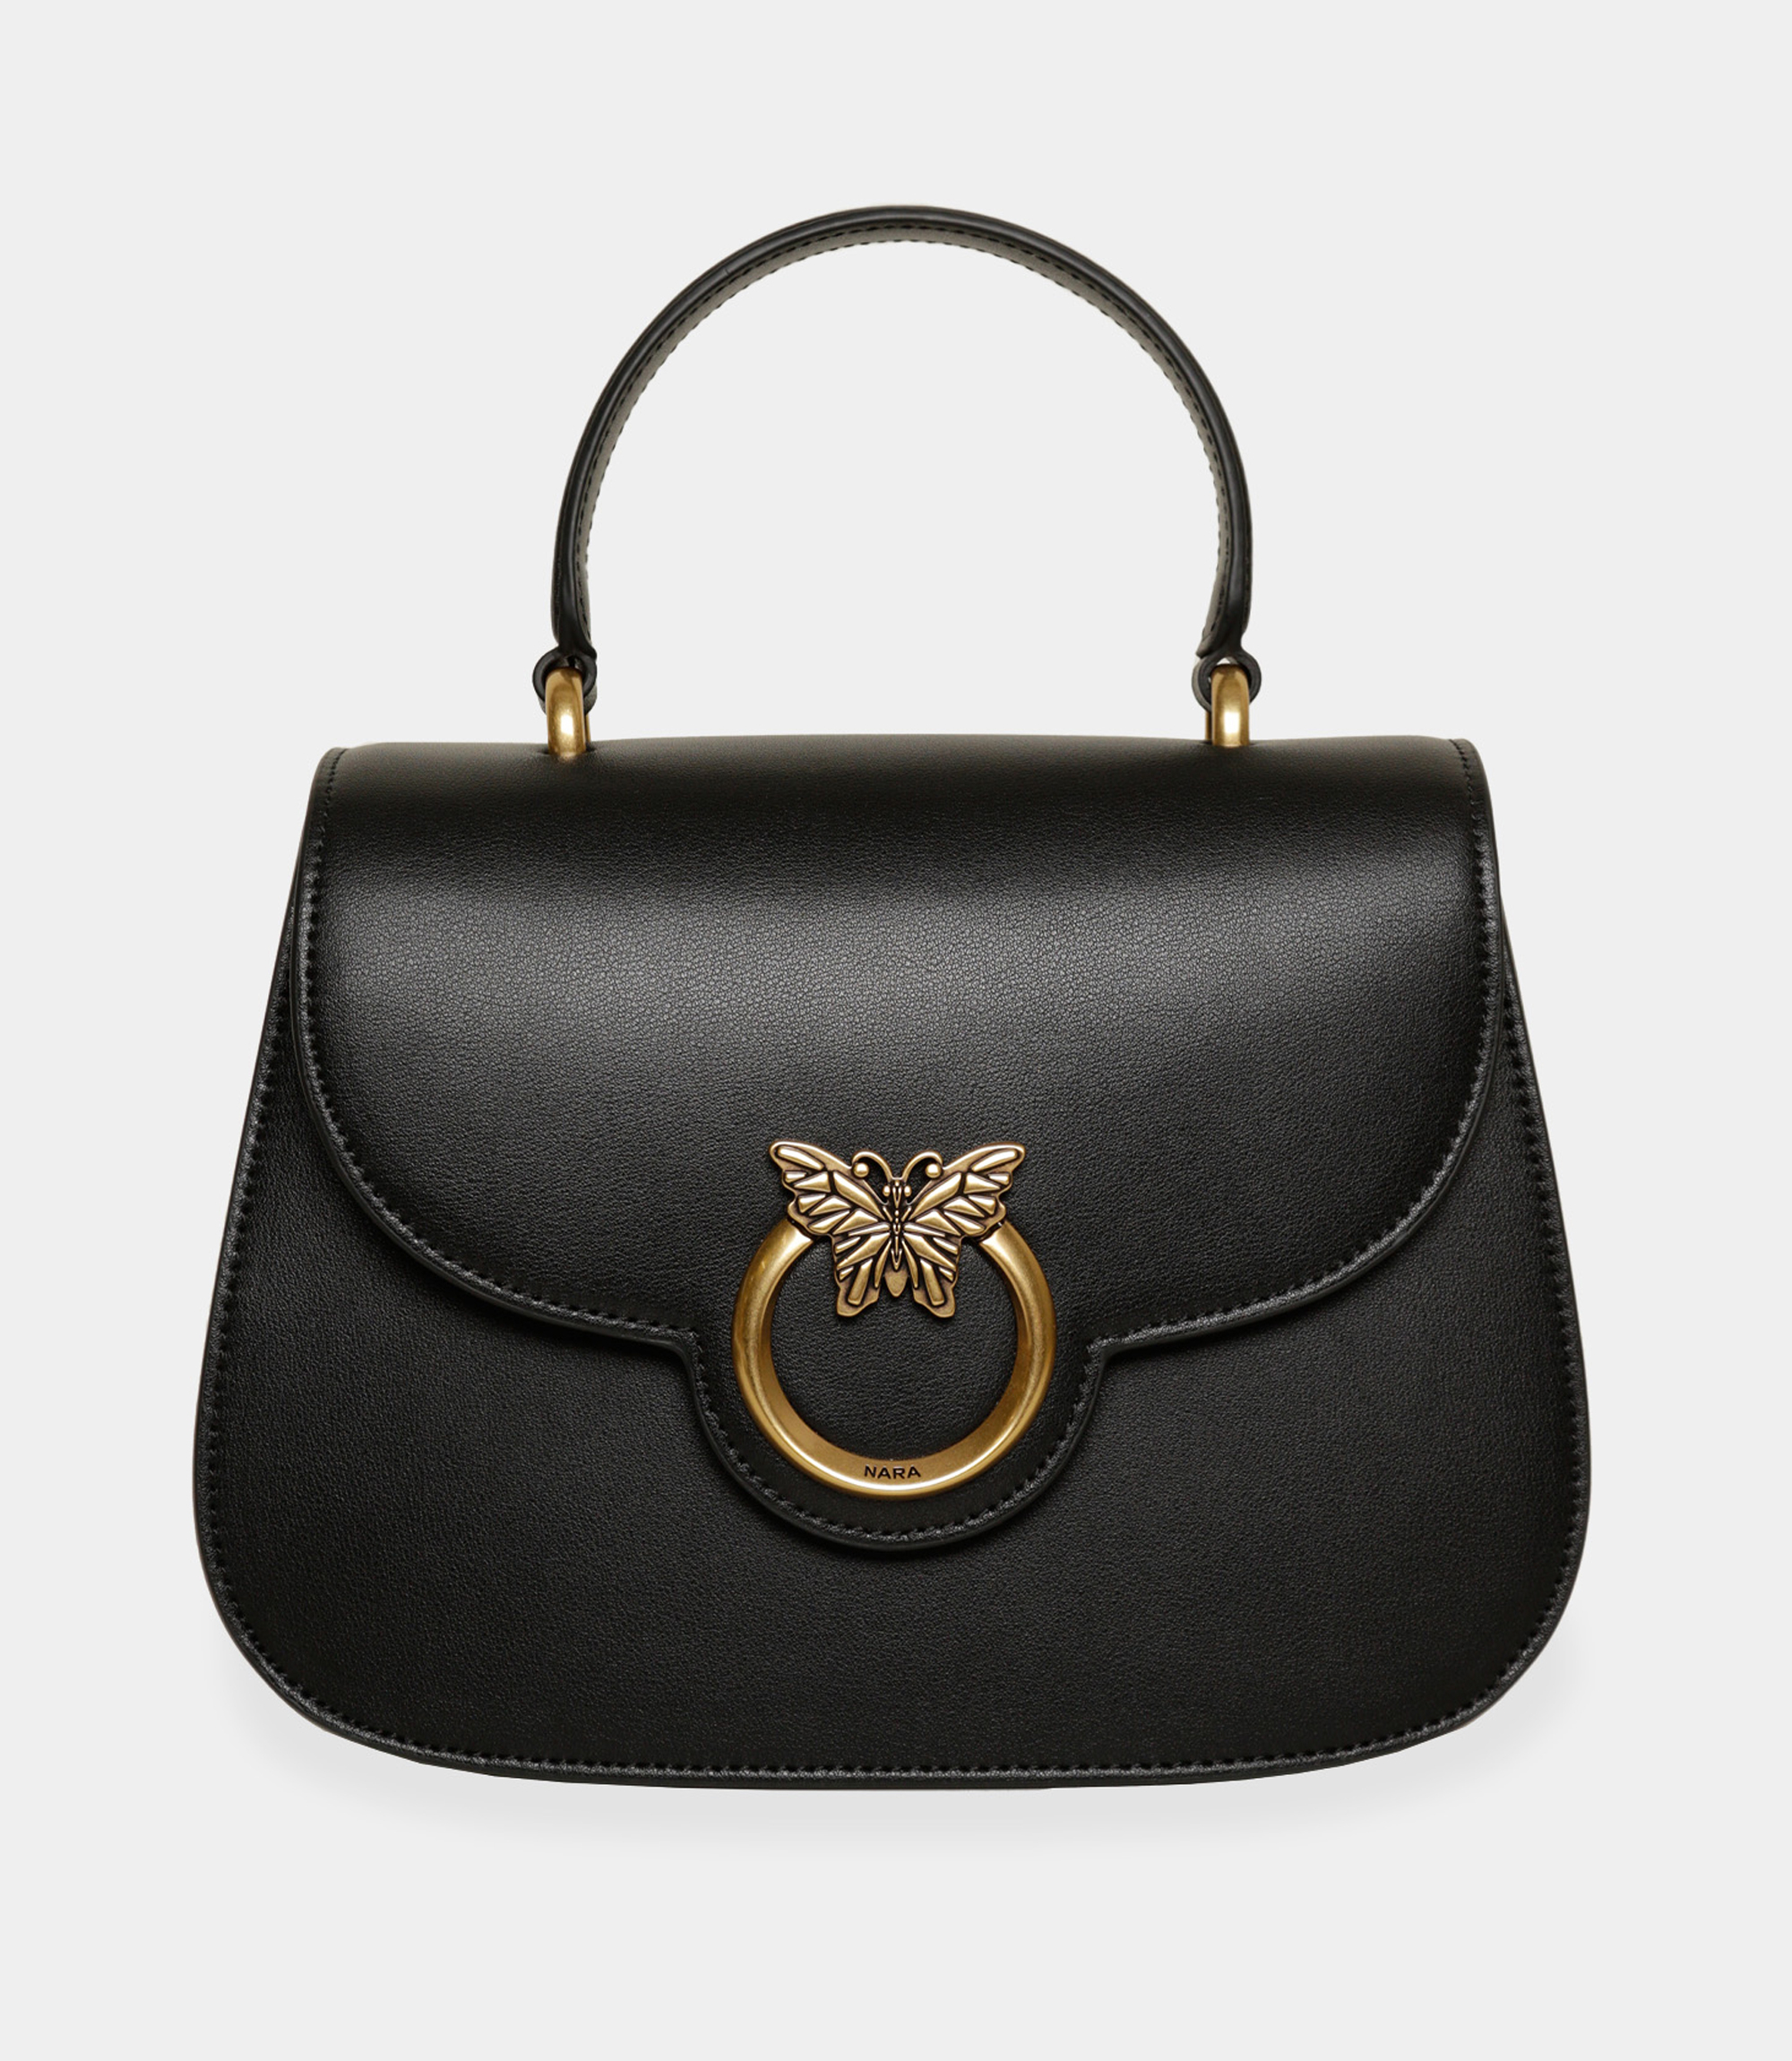 Black handbag made of leather - ACCESSORIES - NaraMilano